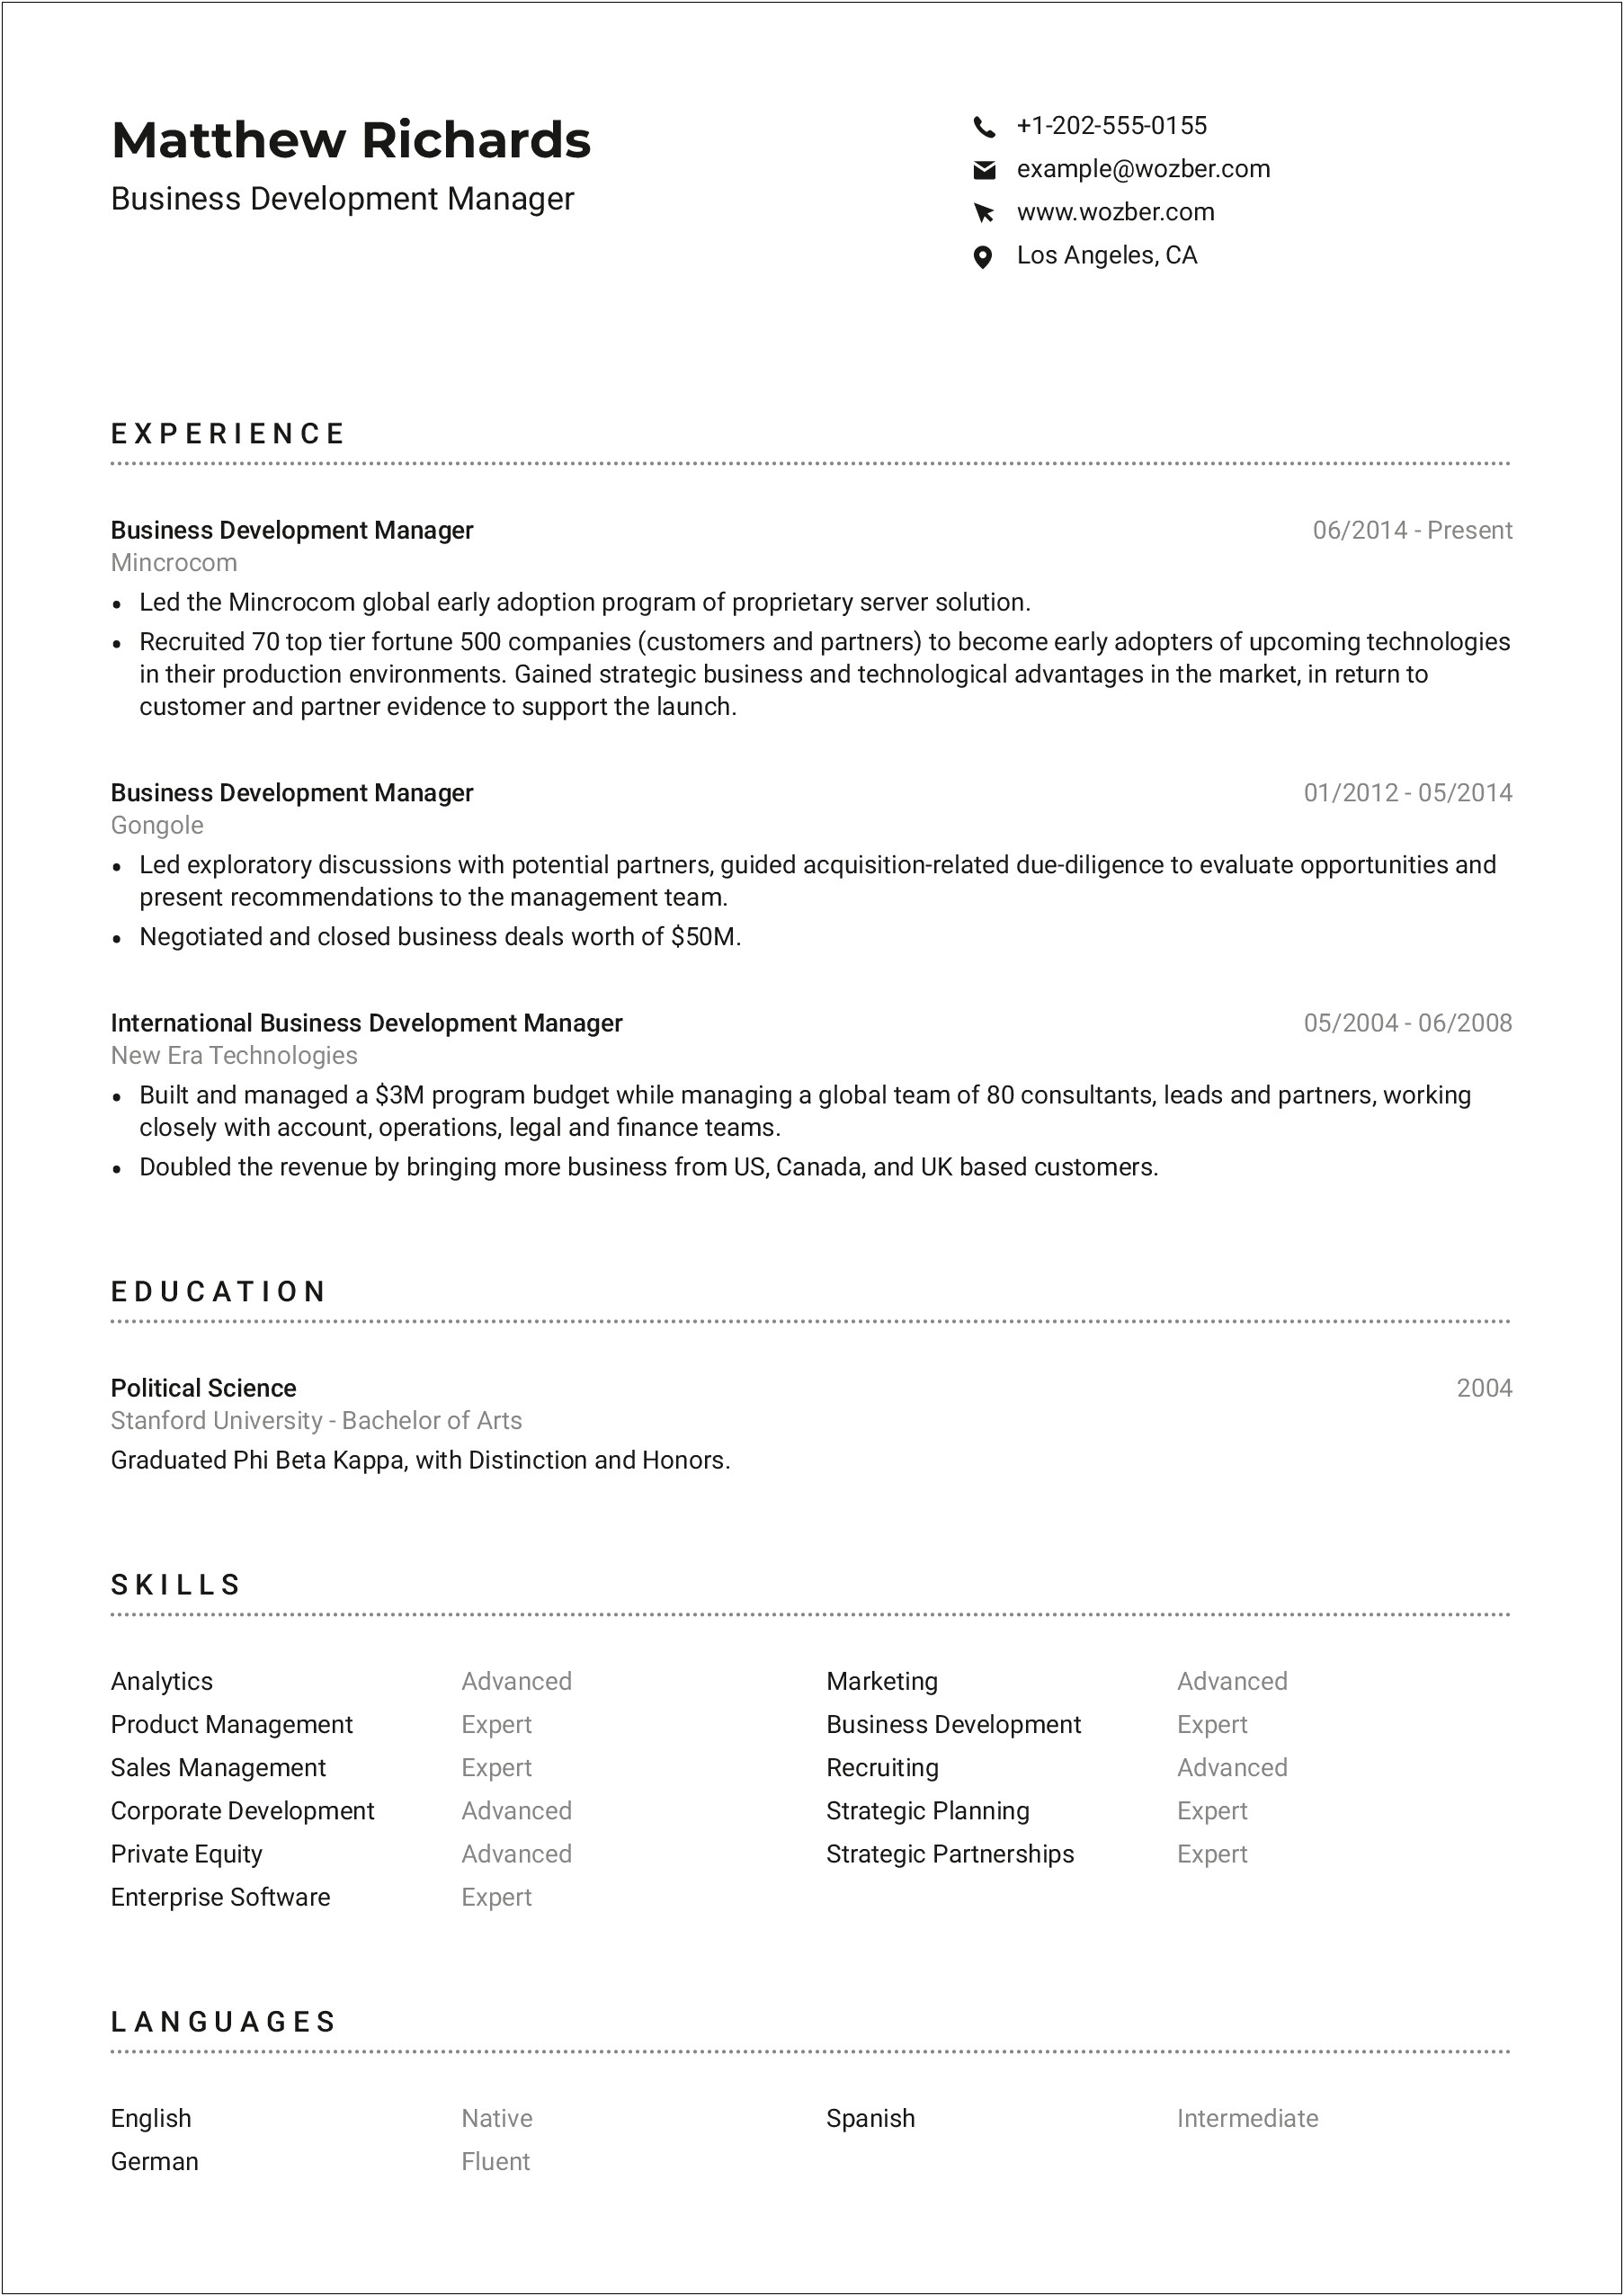 Sample Resume For Market Business Development Manager